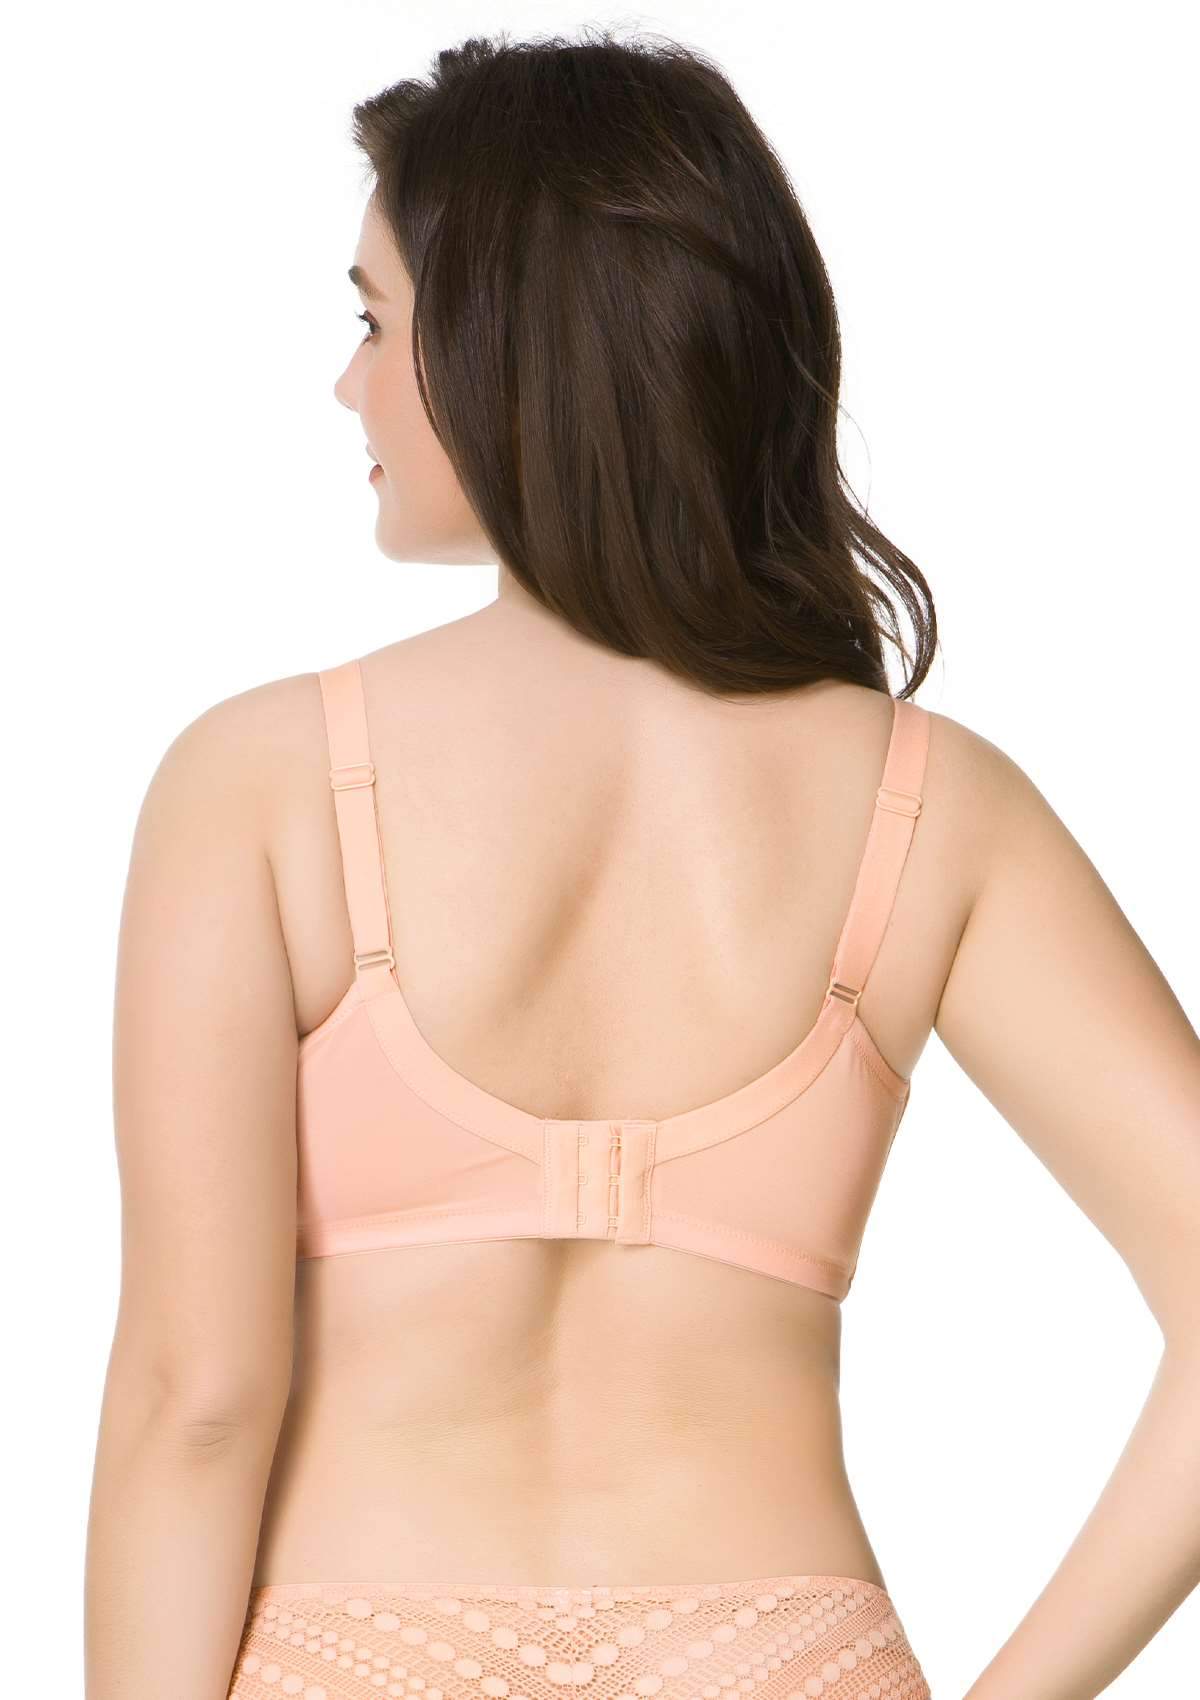 HSIA Heroine Lace Bra And Panty: Best Full Figure Minimizer Bra - Rose Cloud / 38 / D